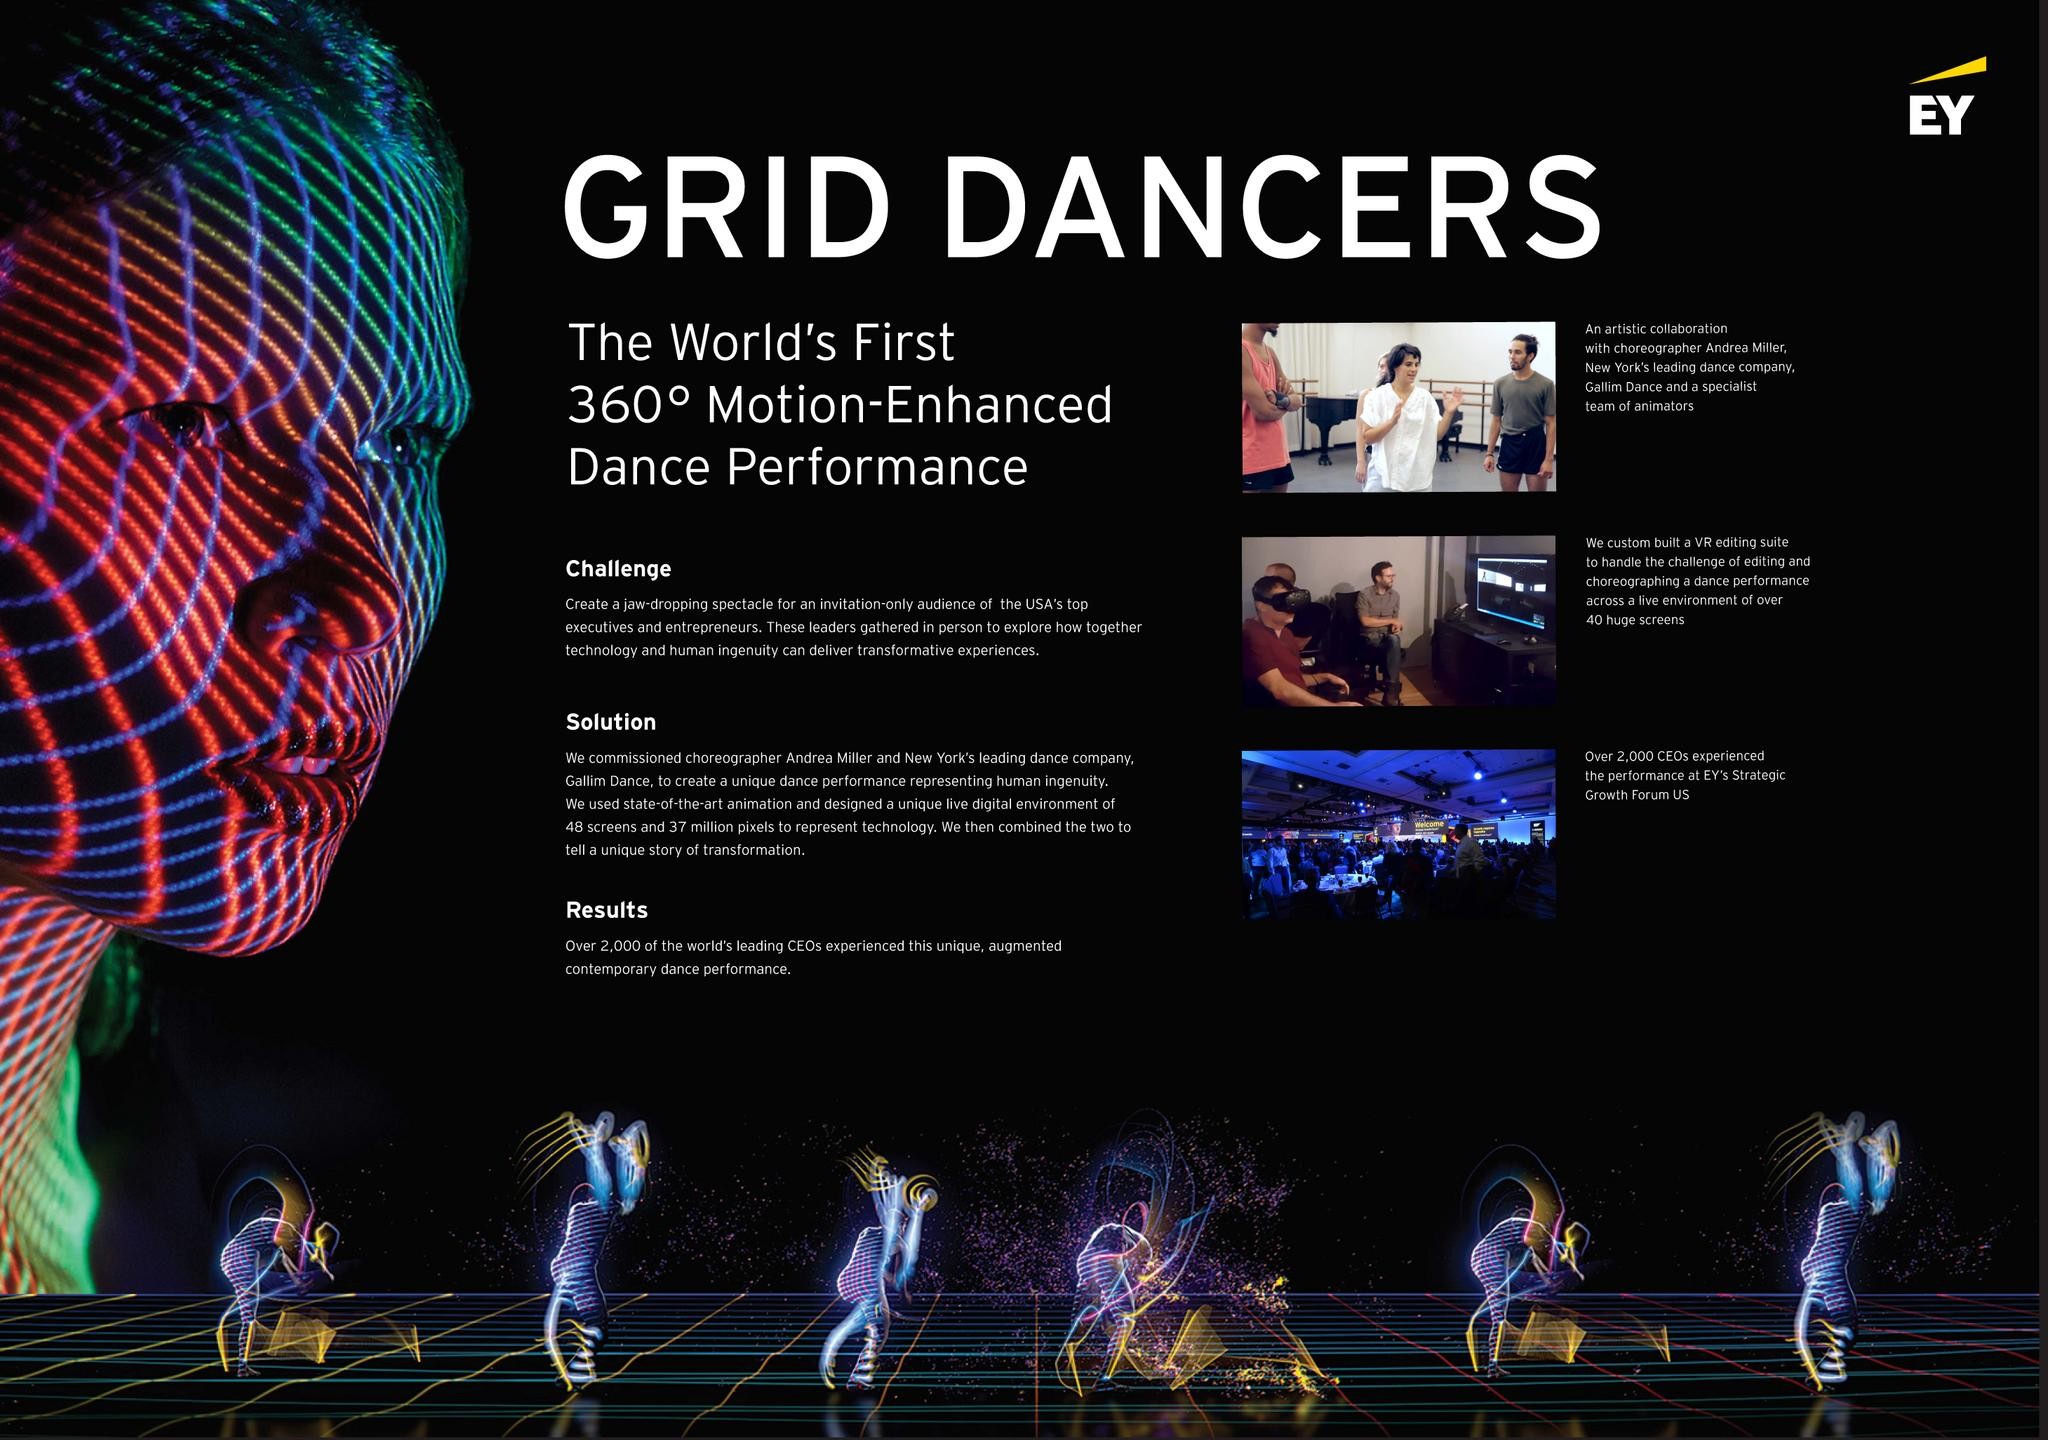 Grid dancers